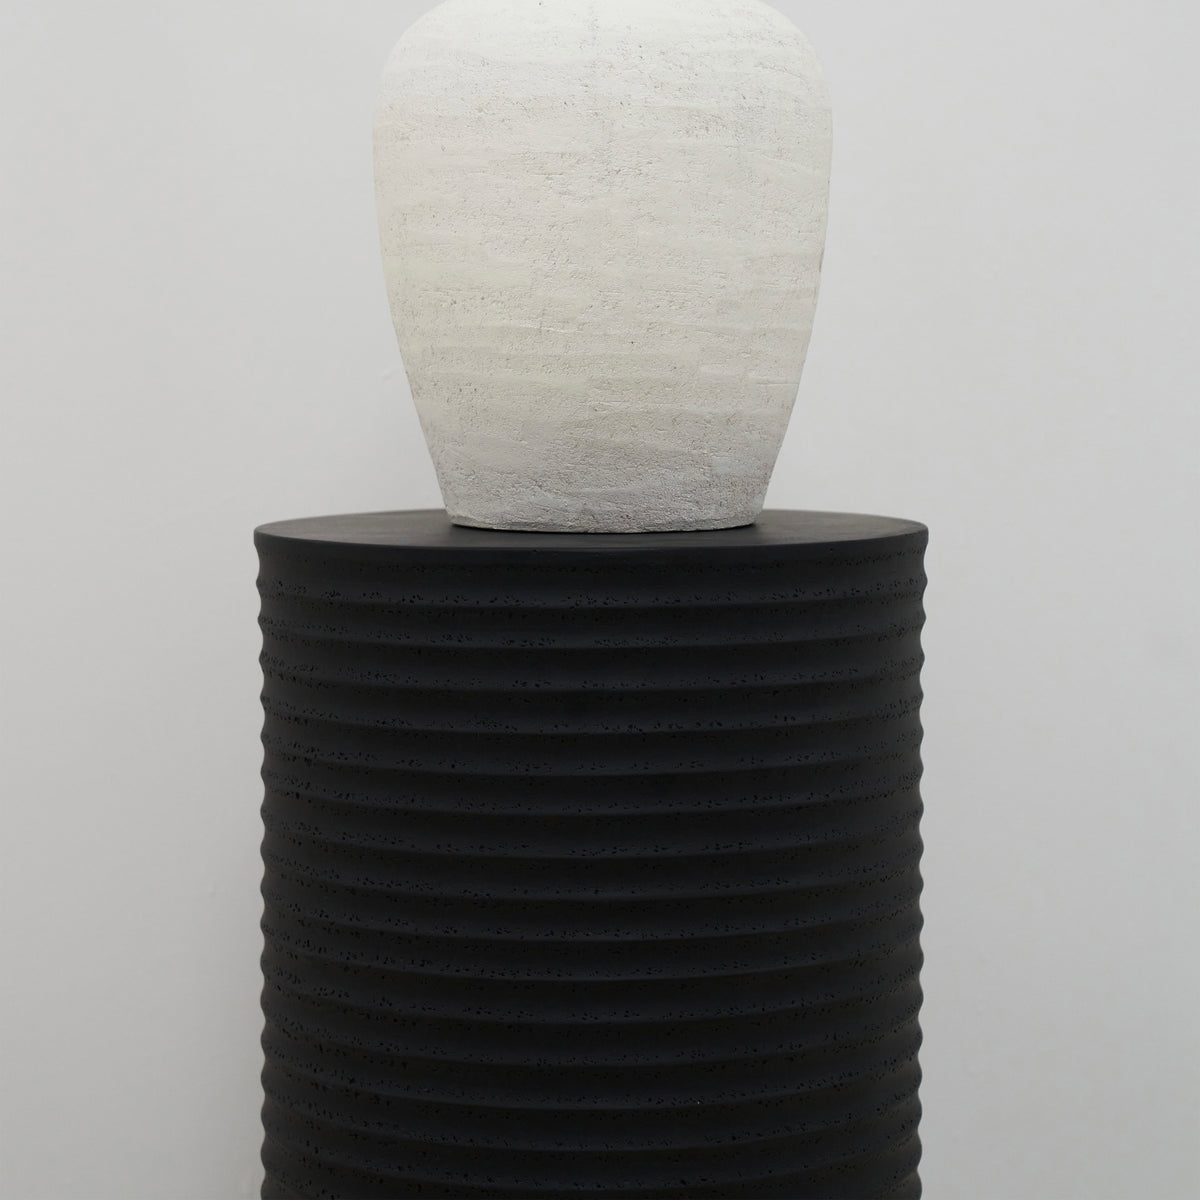 detail shot of vase on Minimal Onyx Ribbed Plinth